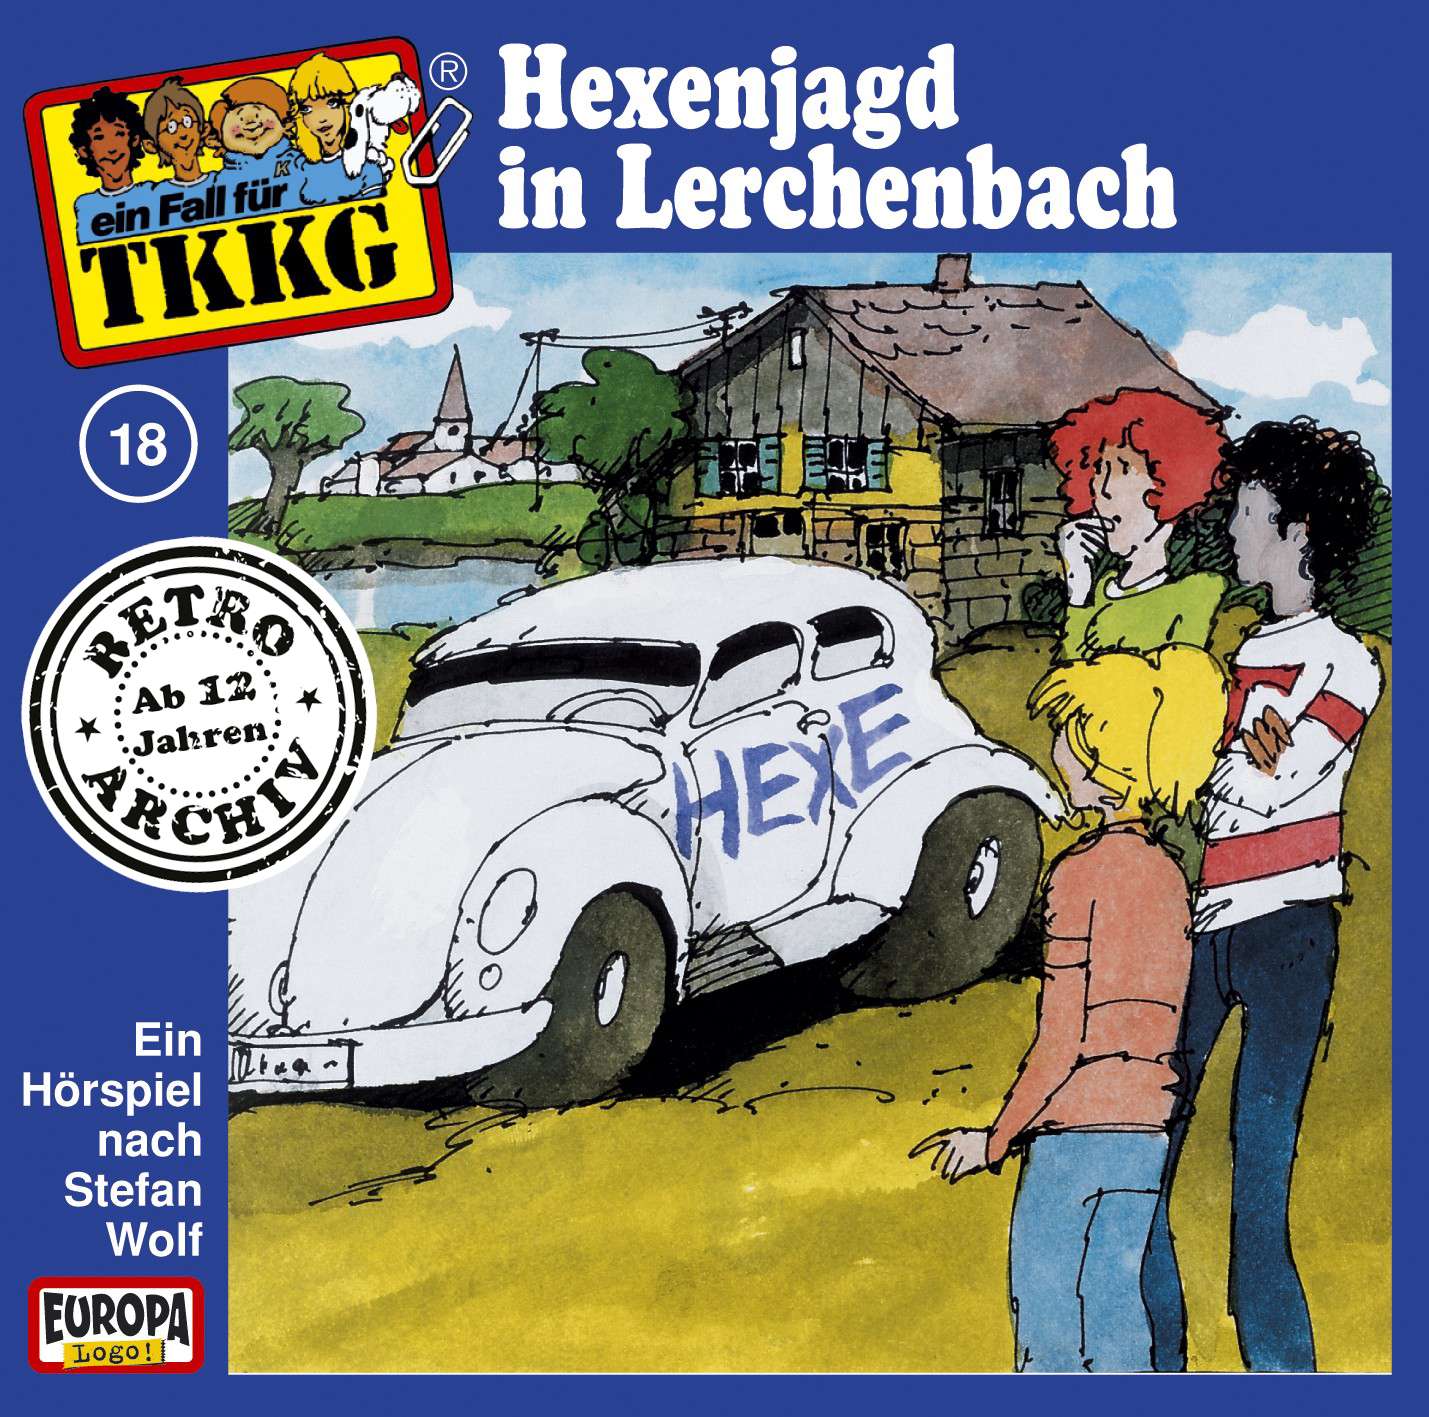 TKKG Retro-Archiv: Hexenjagd im Lerchenbach